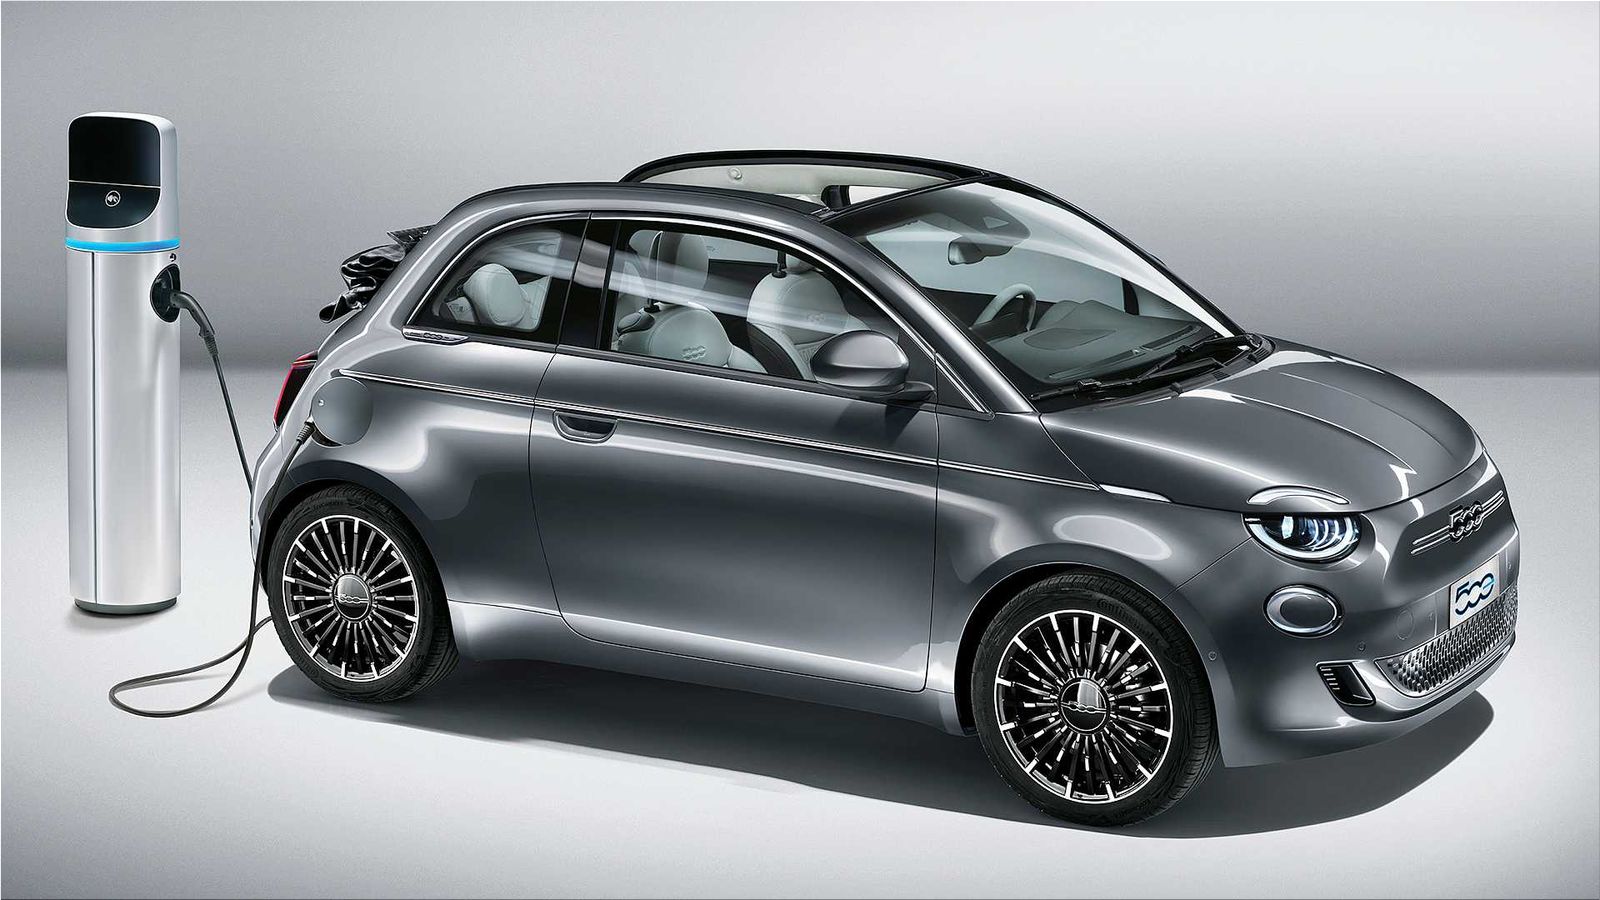 The new Fiat 500 La Prima 100% electric car with level 2